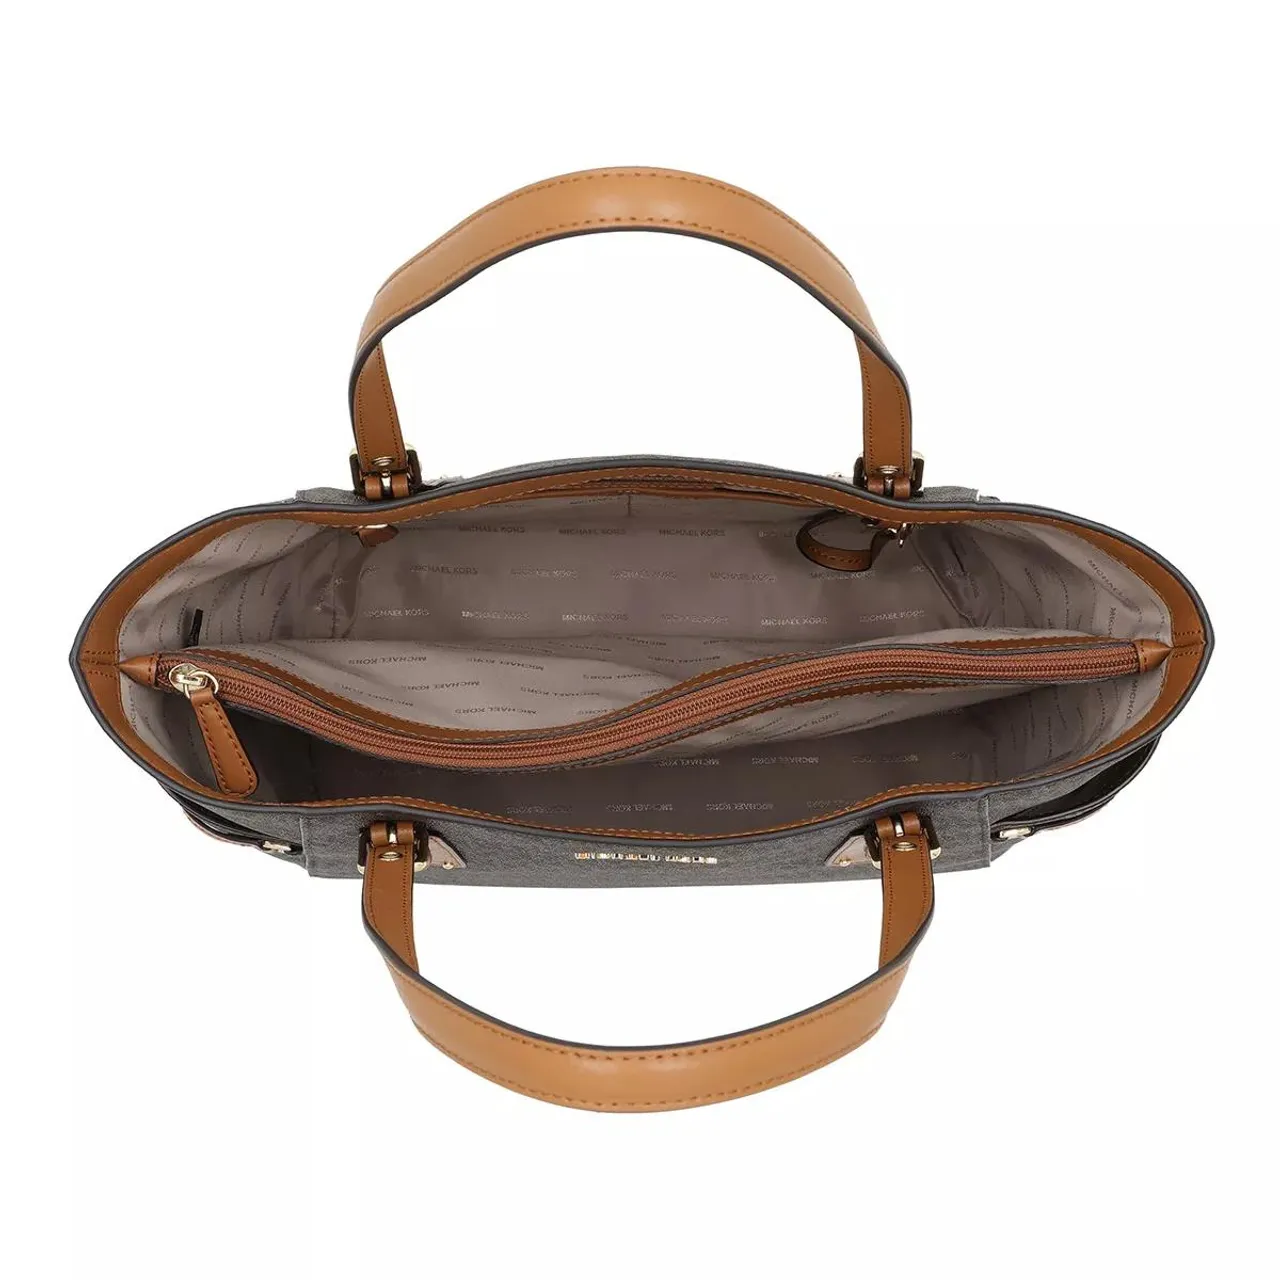 Michael Kors Tote Bags - Voyager - brown - Tote Bags for ladies